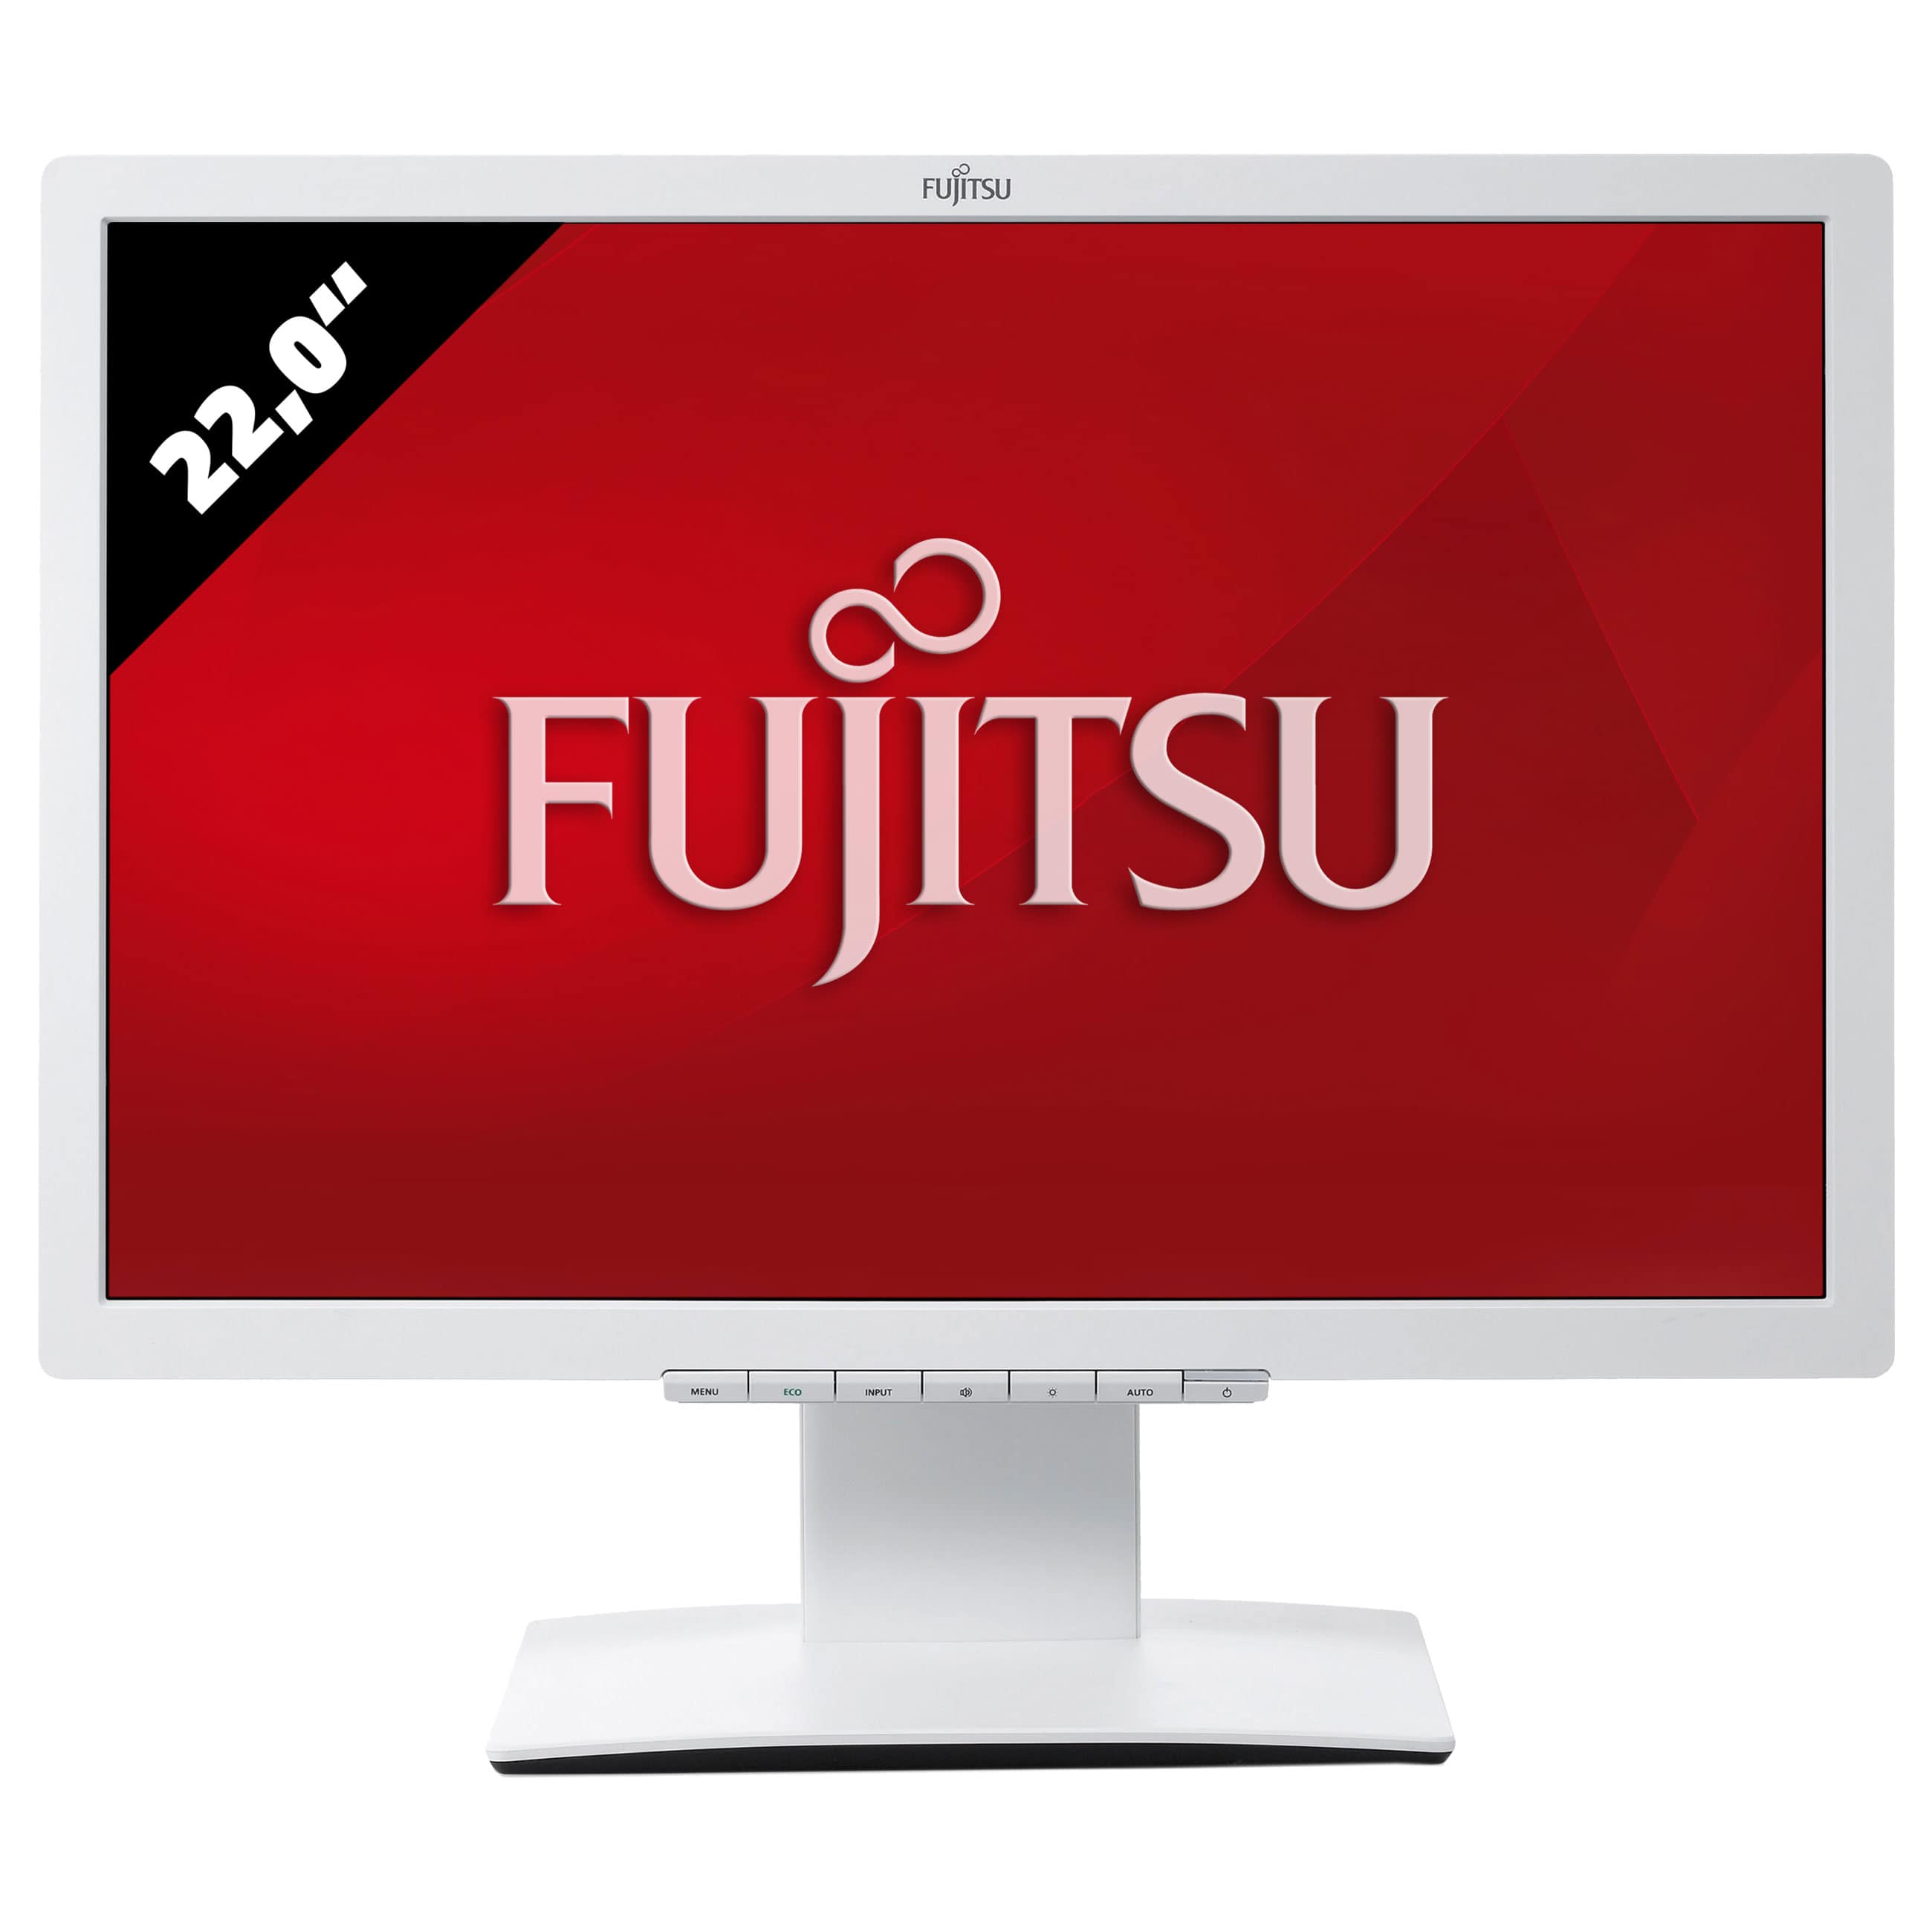 Fujitsu Display B22W-7 LED - 1680 x 1050 - WSXGA+Gut - AfB-refurbished